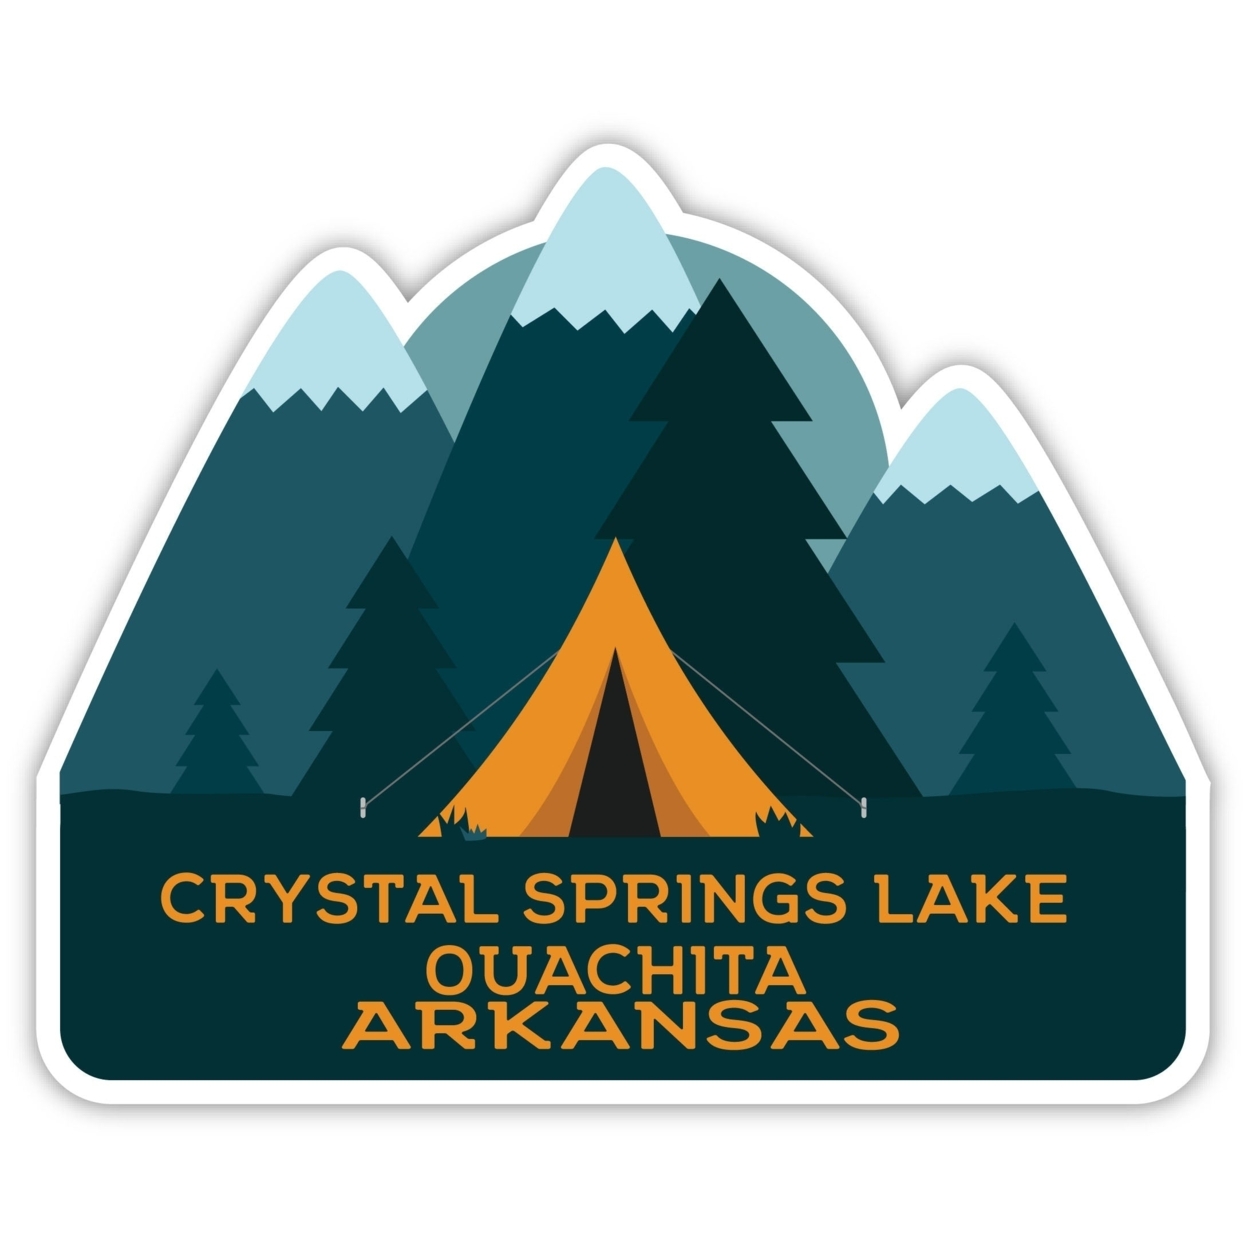 Crystal Springs Lake Ouachita Arkansas Souvenir Decorative Stickers (Choose Theme And Size) - Single Unit, 6-Inch, Tent